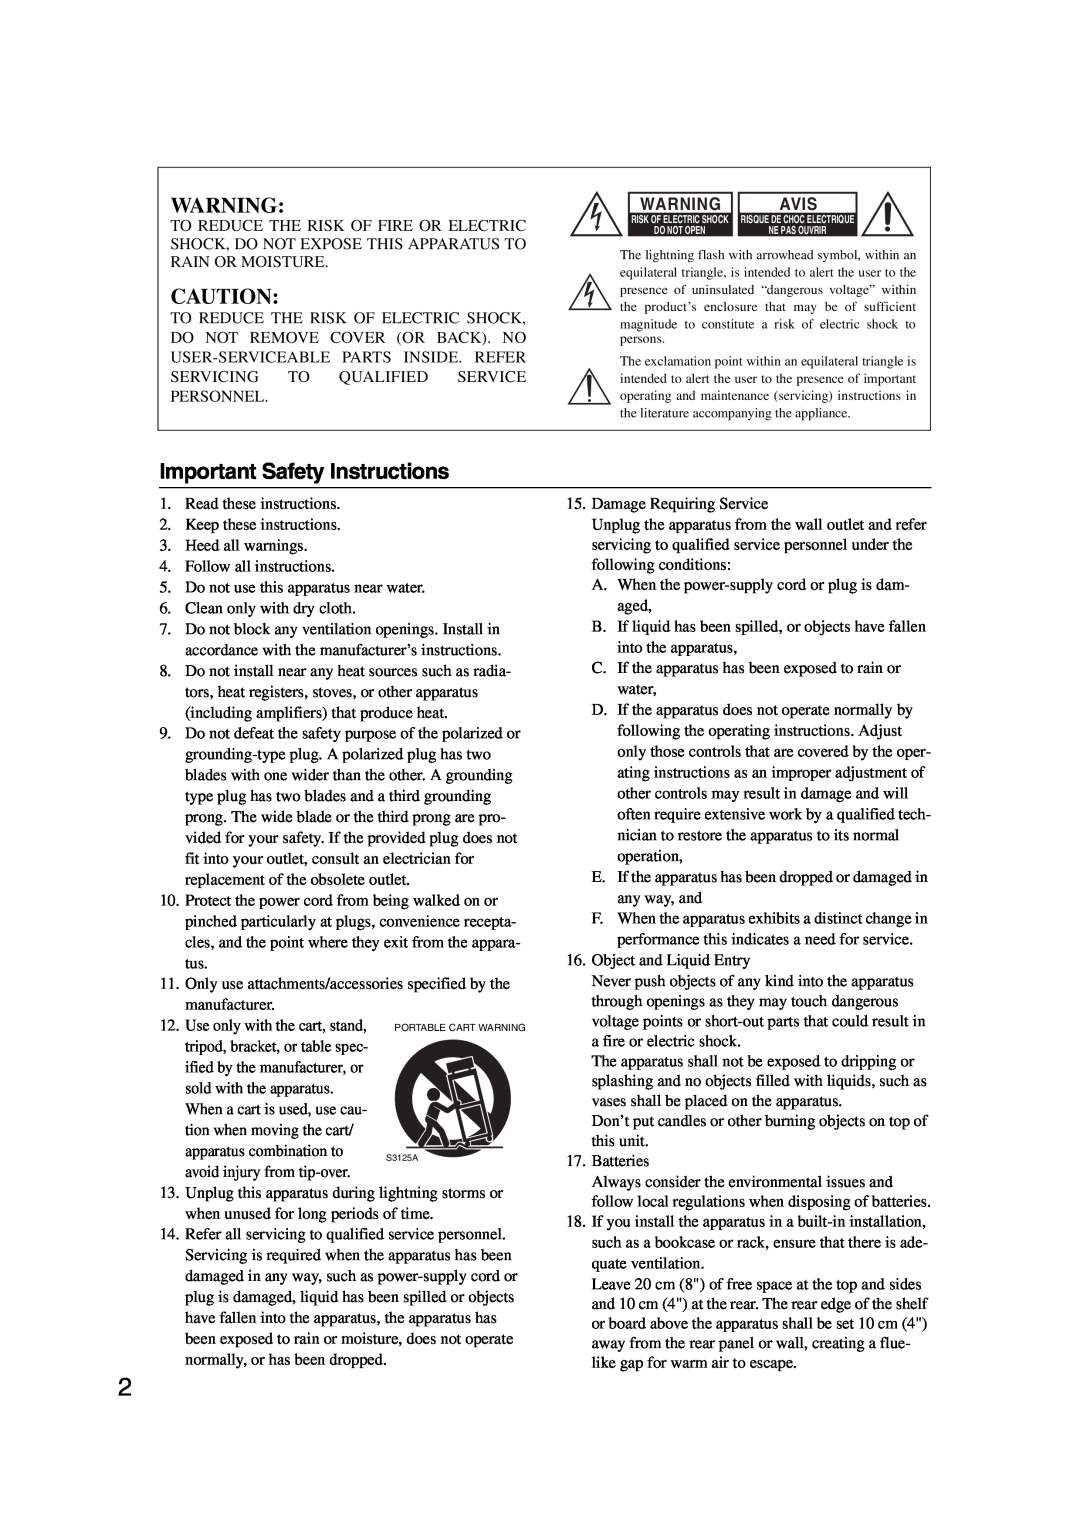 Onkyo 29344934 instruction manual Important Safety Instructions, Avis 